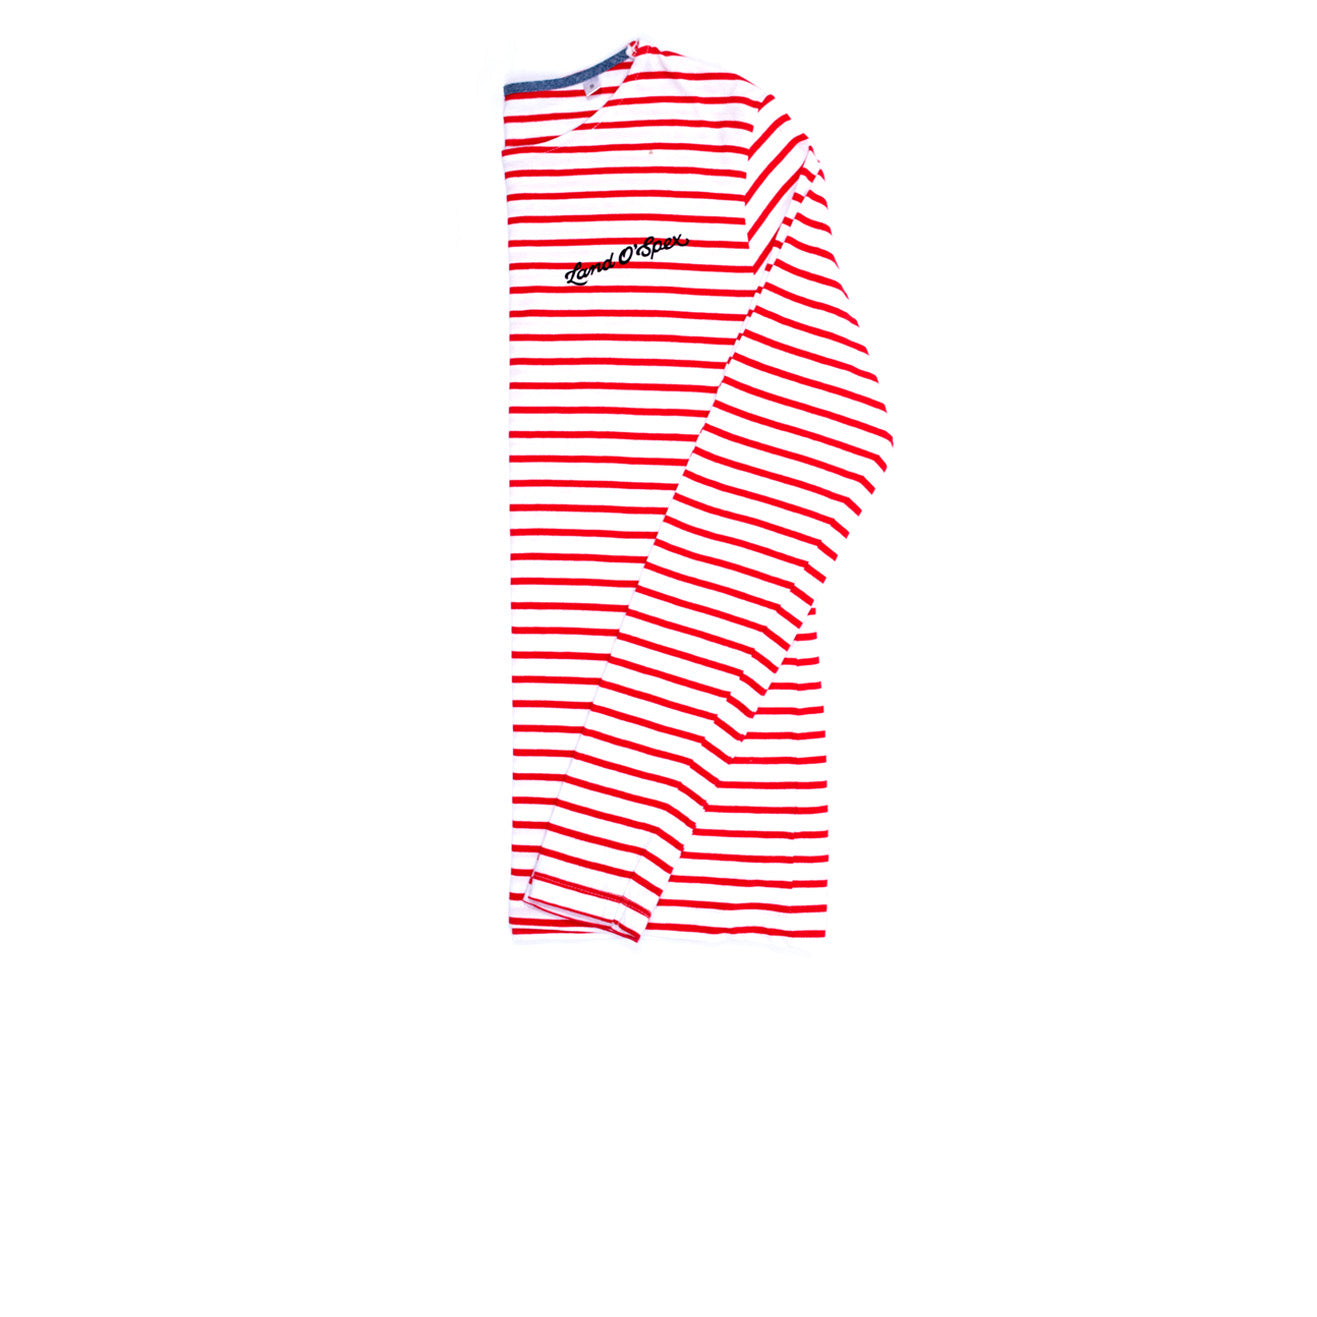 Breton Striped Nautical Top in Red